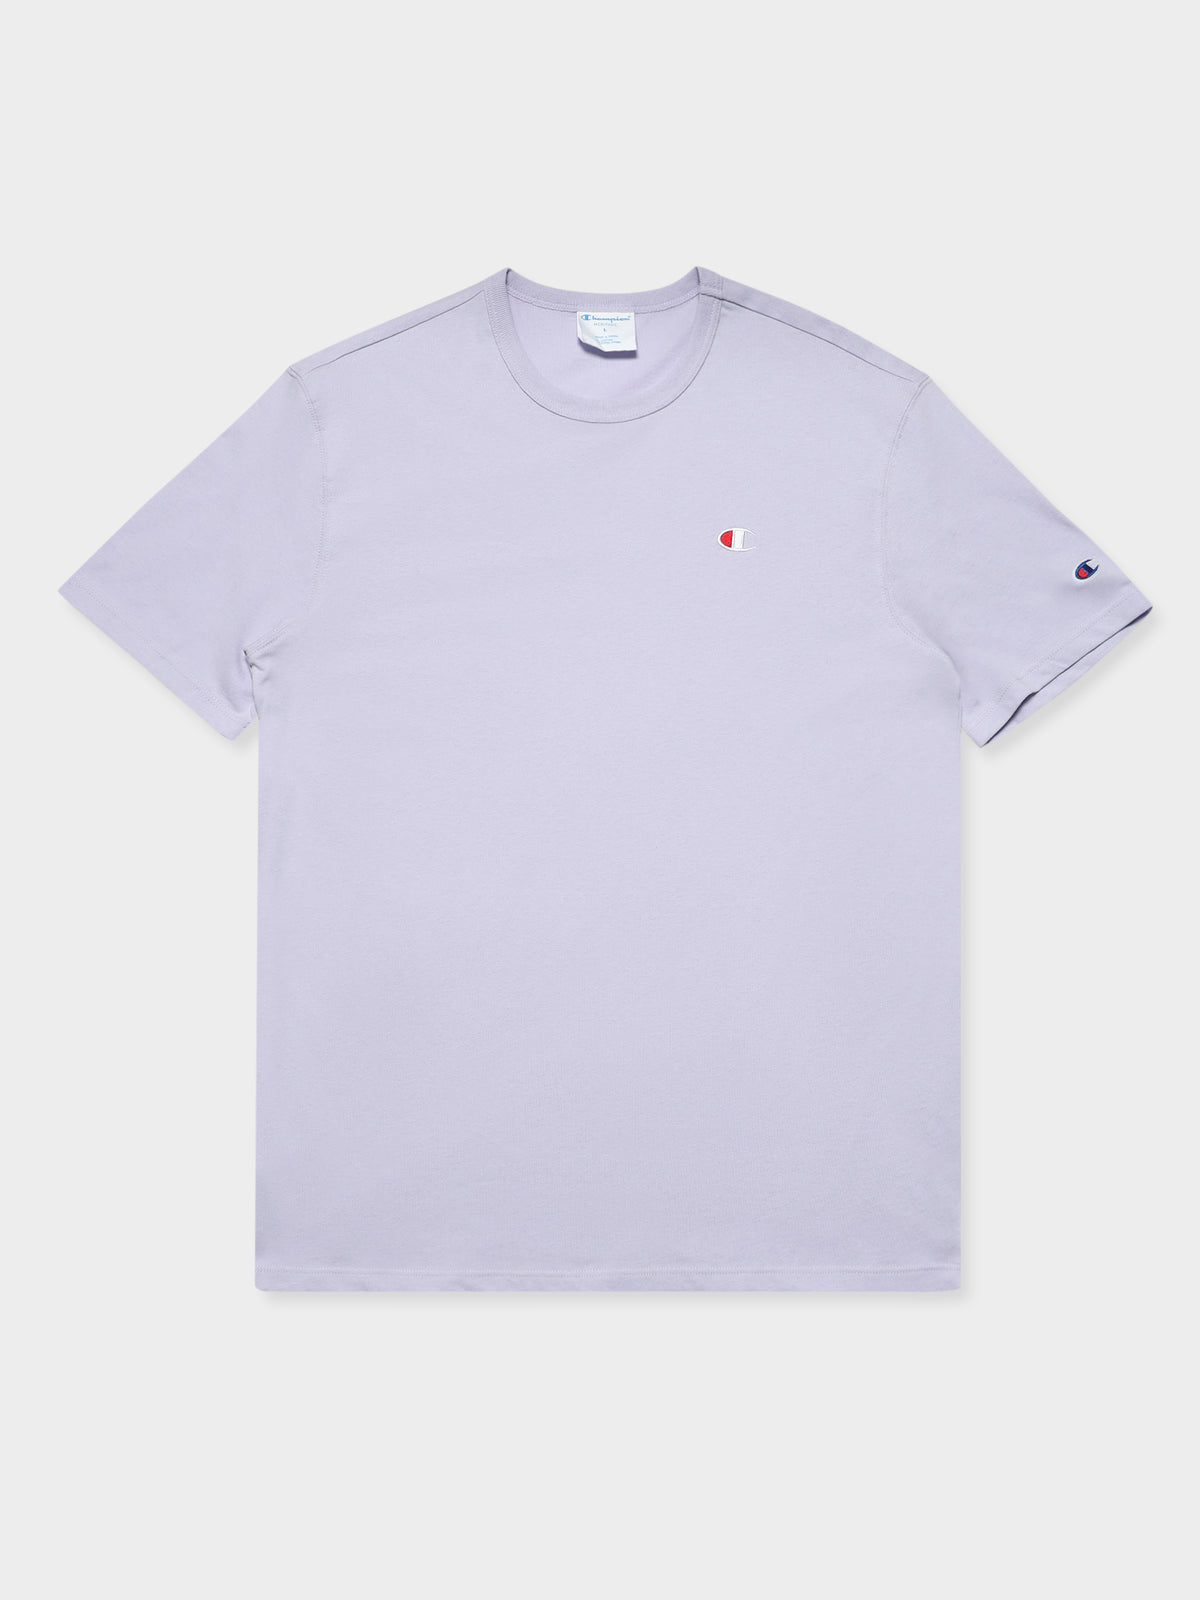 Re:bound C Logo T-Shirt in Urban Lilac